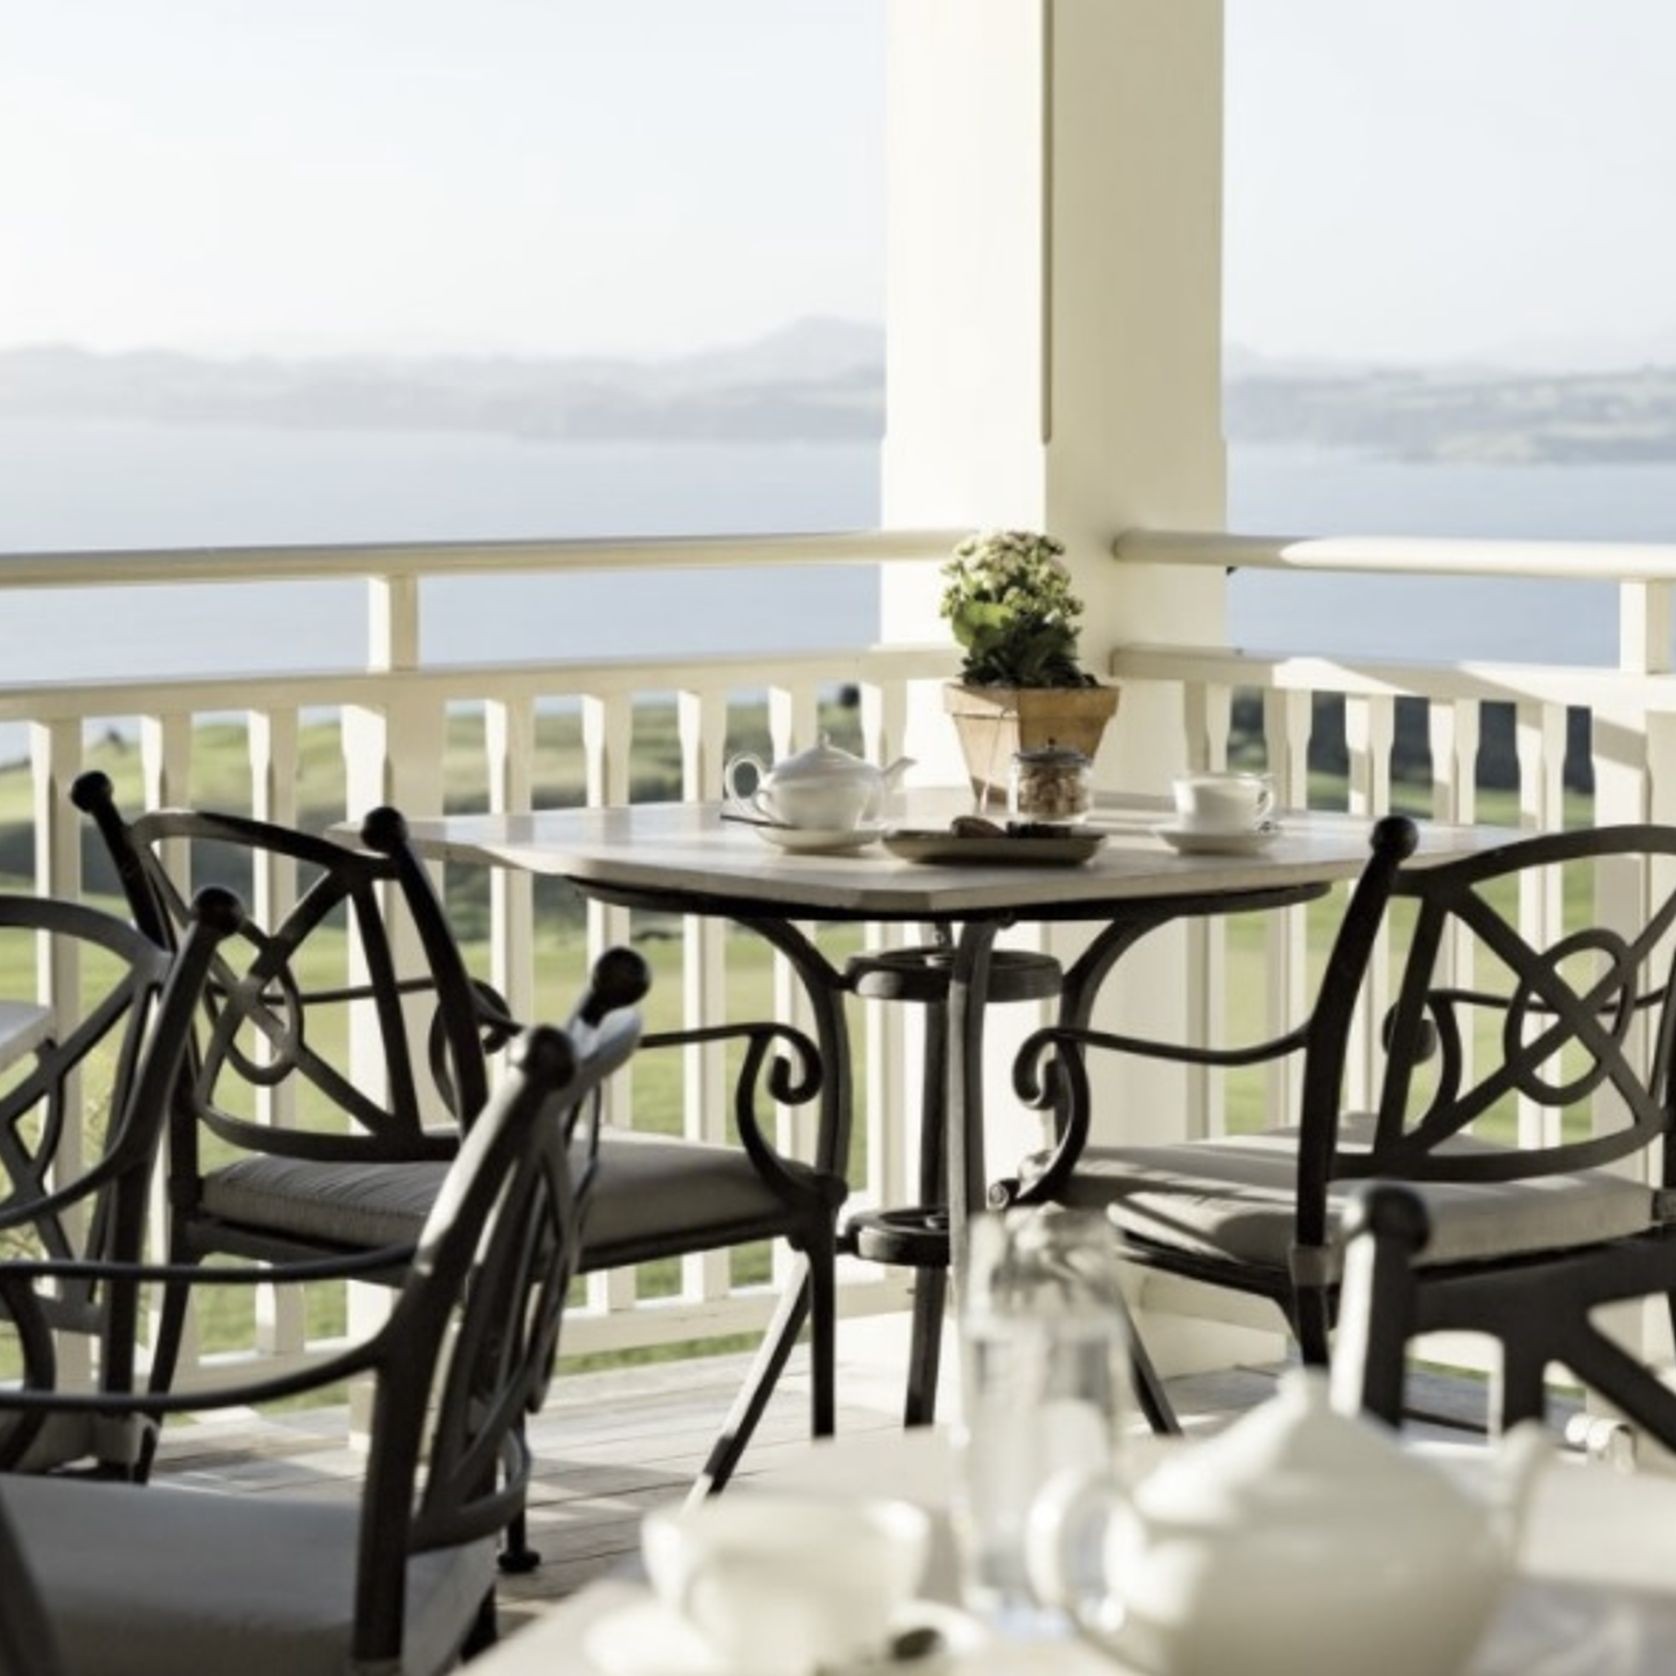 Santorini Dining Chair gallery detail image